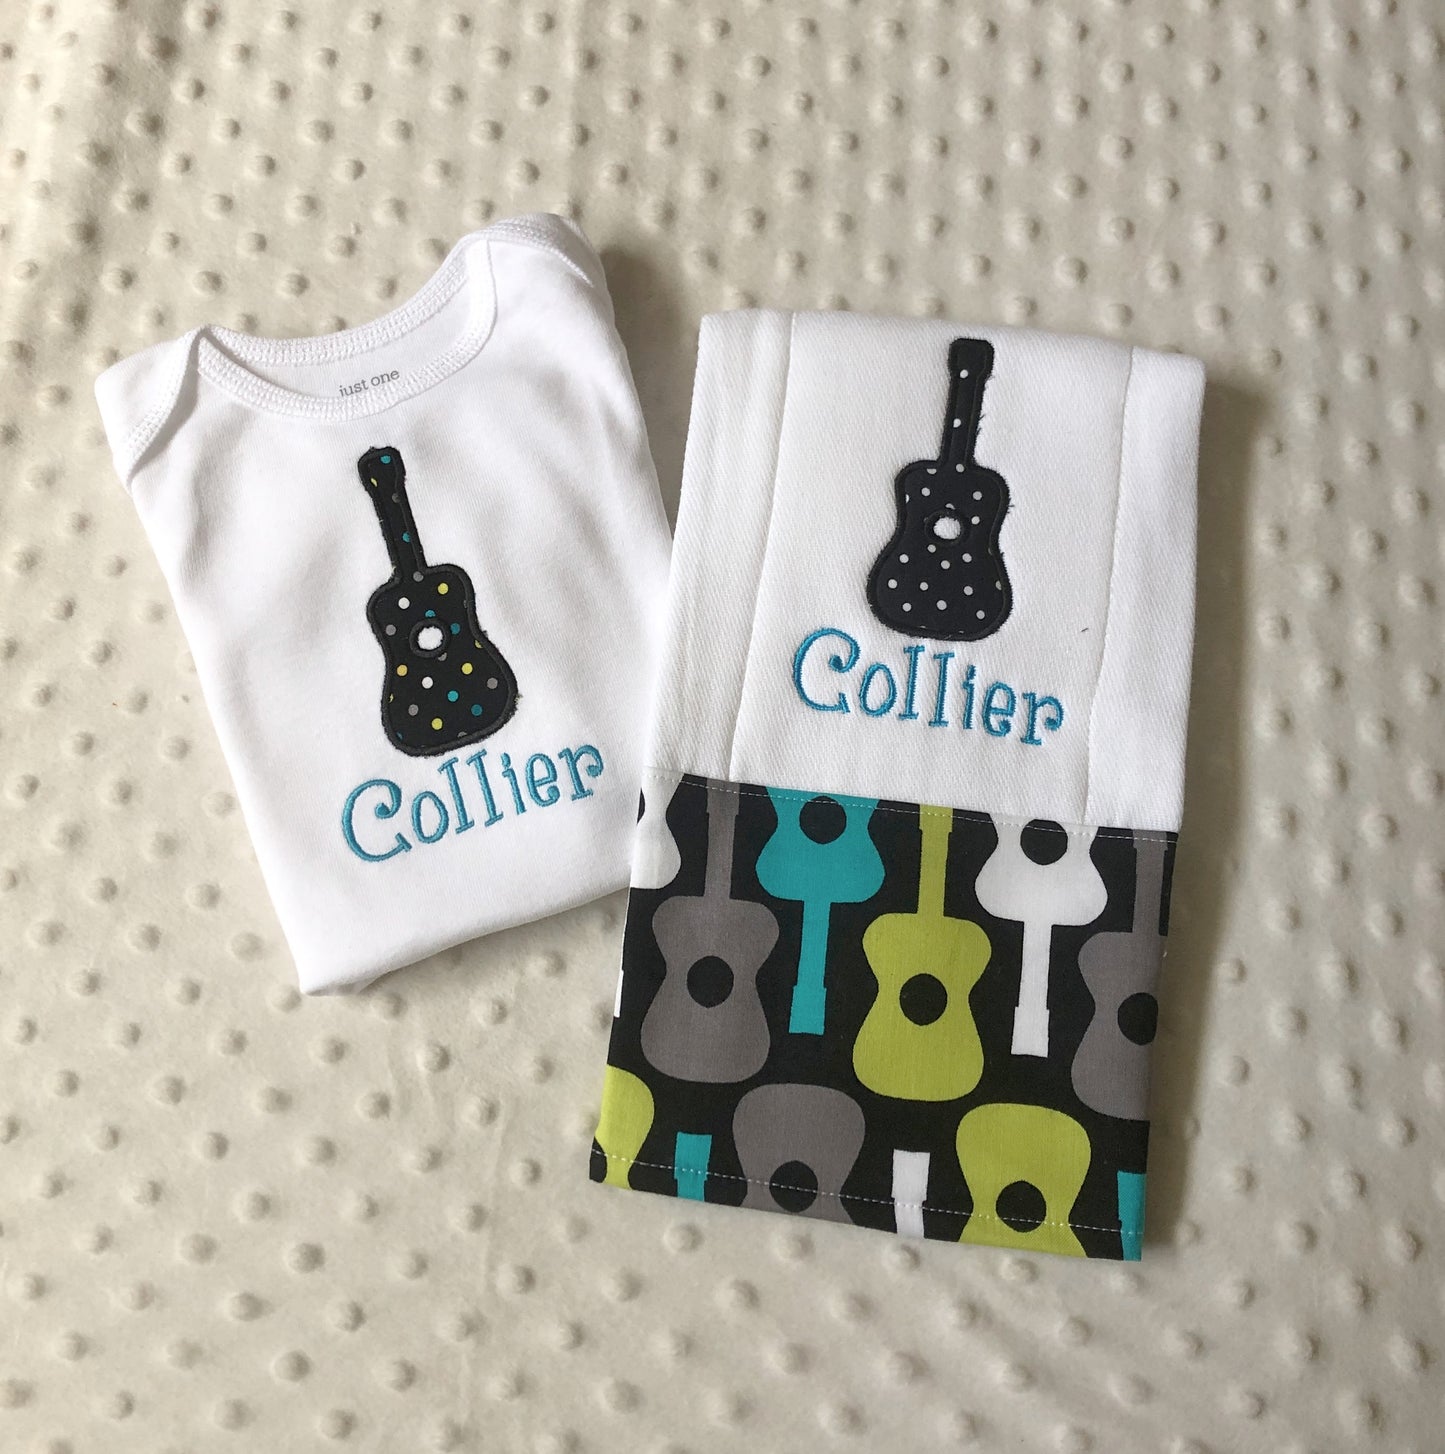 Customized Baby Boy Gift Set: Guitar Theme Bodysuit and Burp Cloth